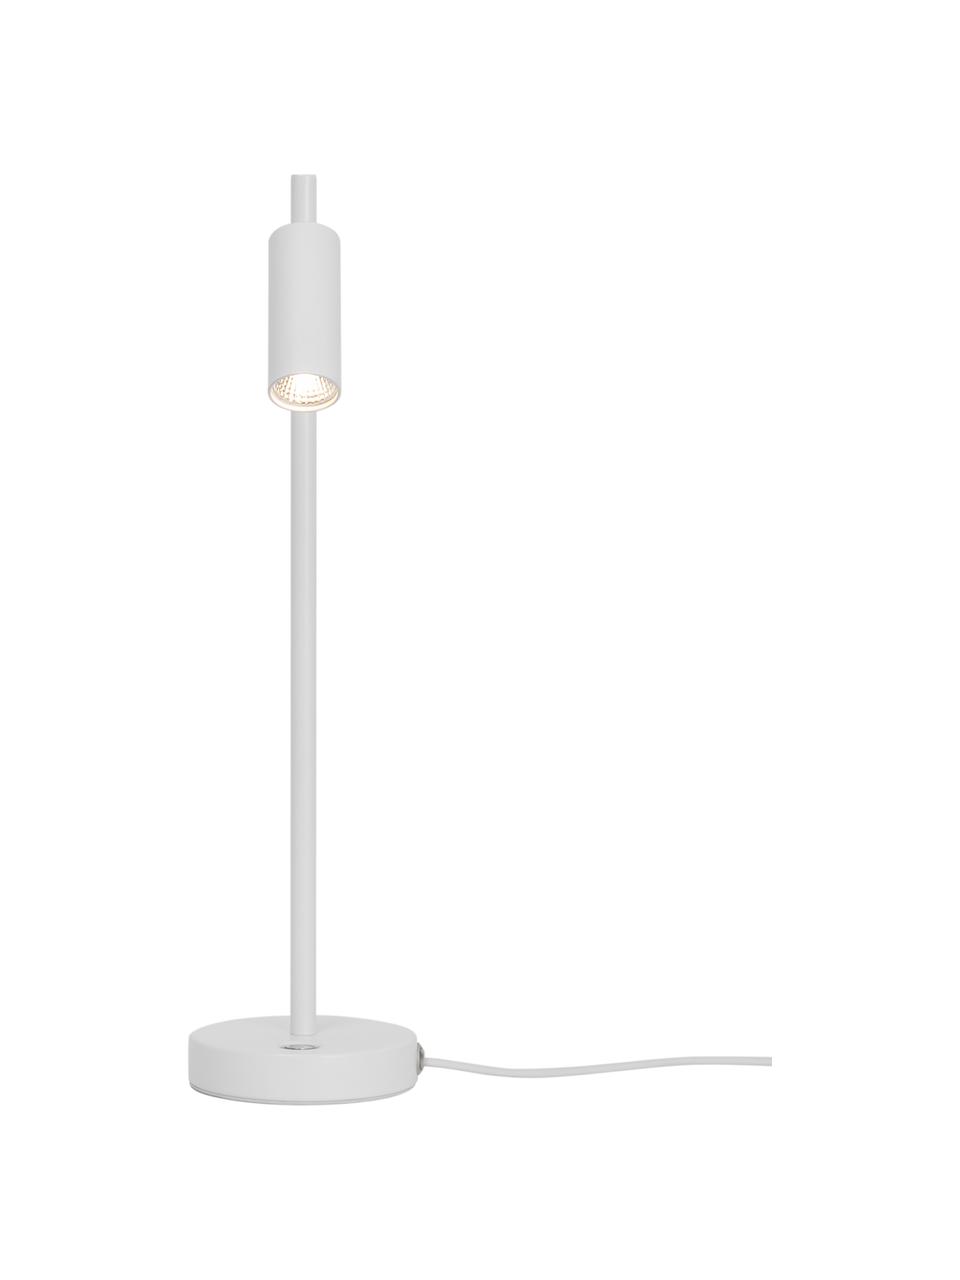 Dimmbare LED-Schreibtischlampe Omari in Weiß, Lampenschirm: Metall, beschichtet, Lampenfuß: Metall, beschichtet, Weiß, B 10 x H 40 cm